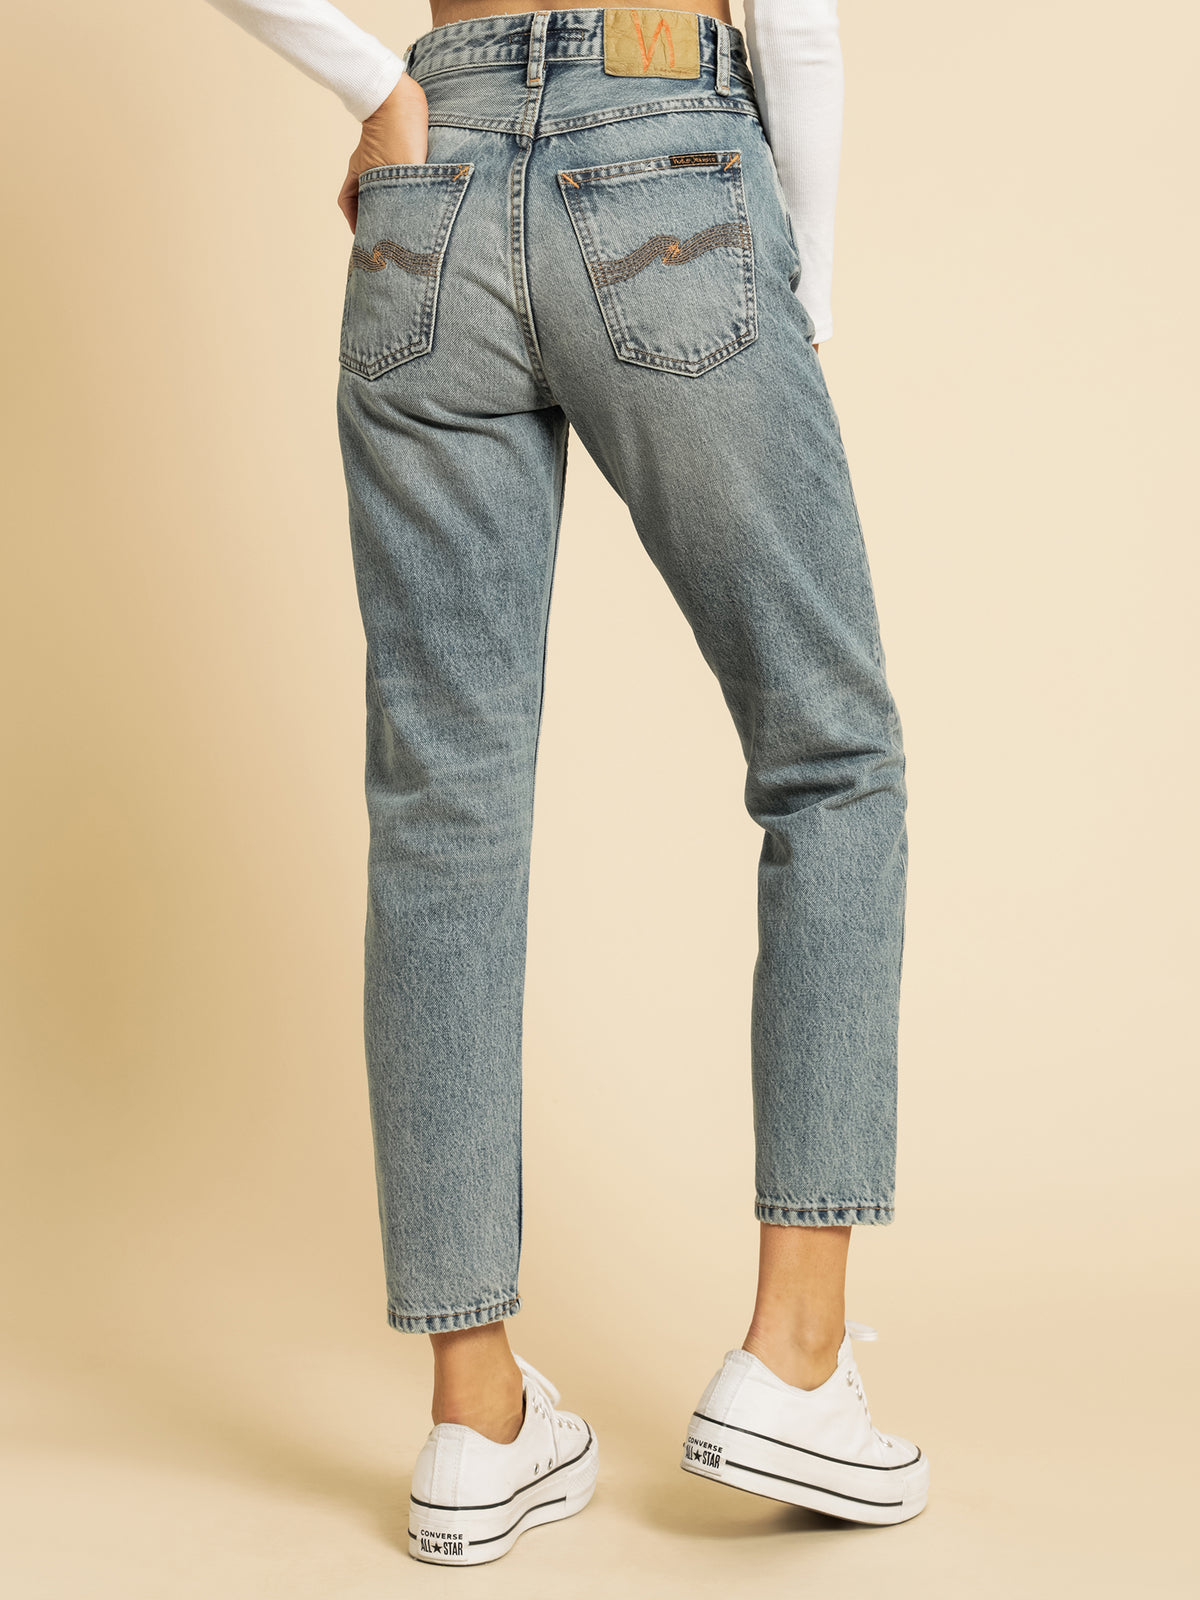 Breezy Britt Slim Jeans in Light Depo